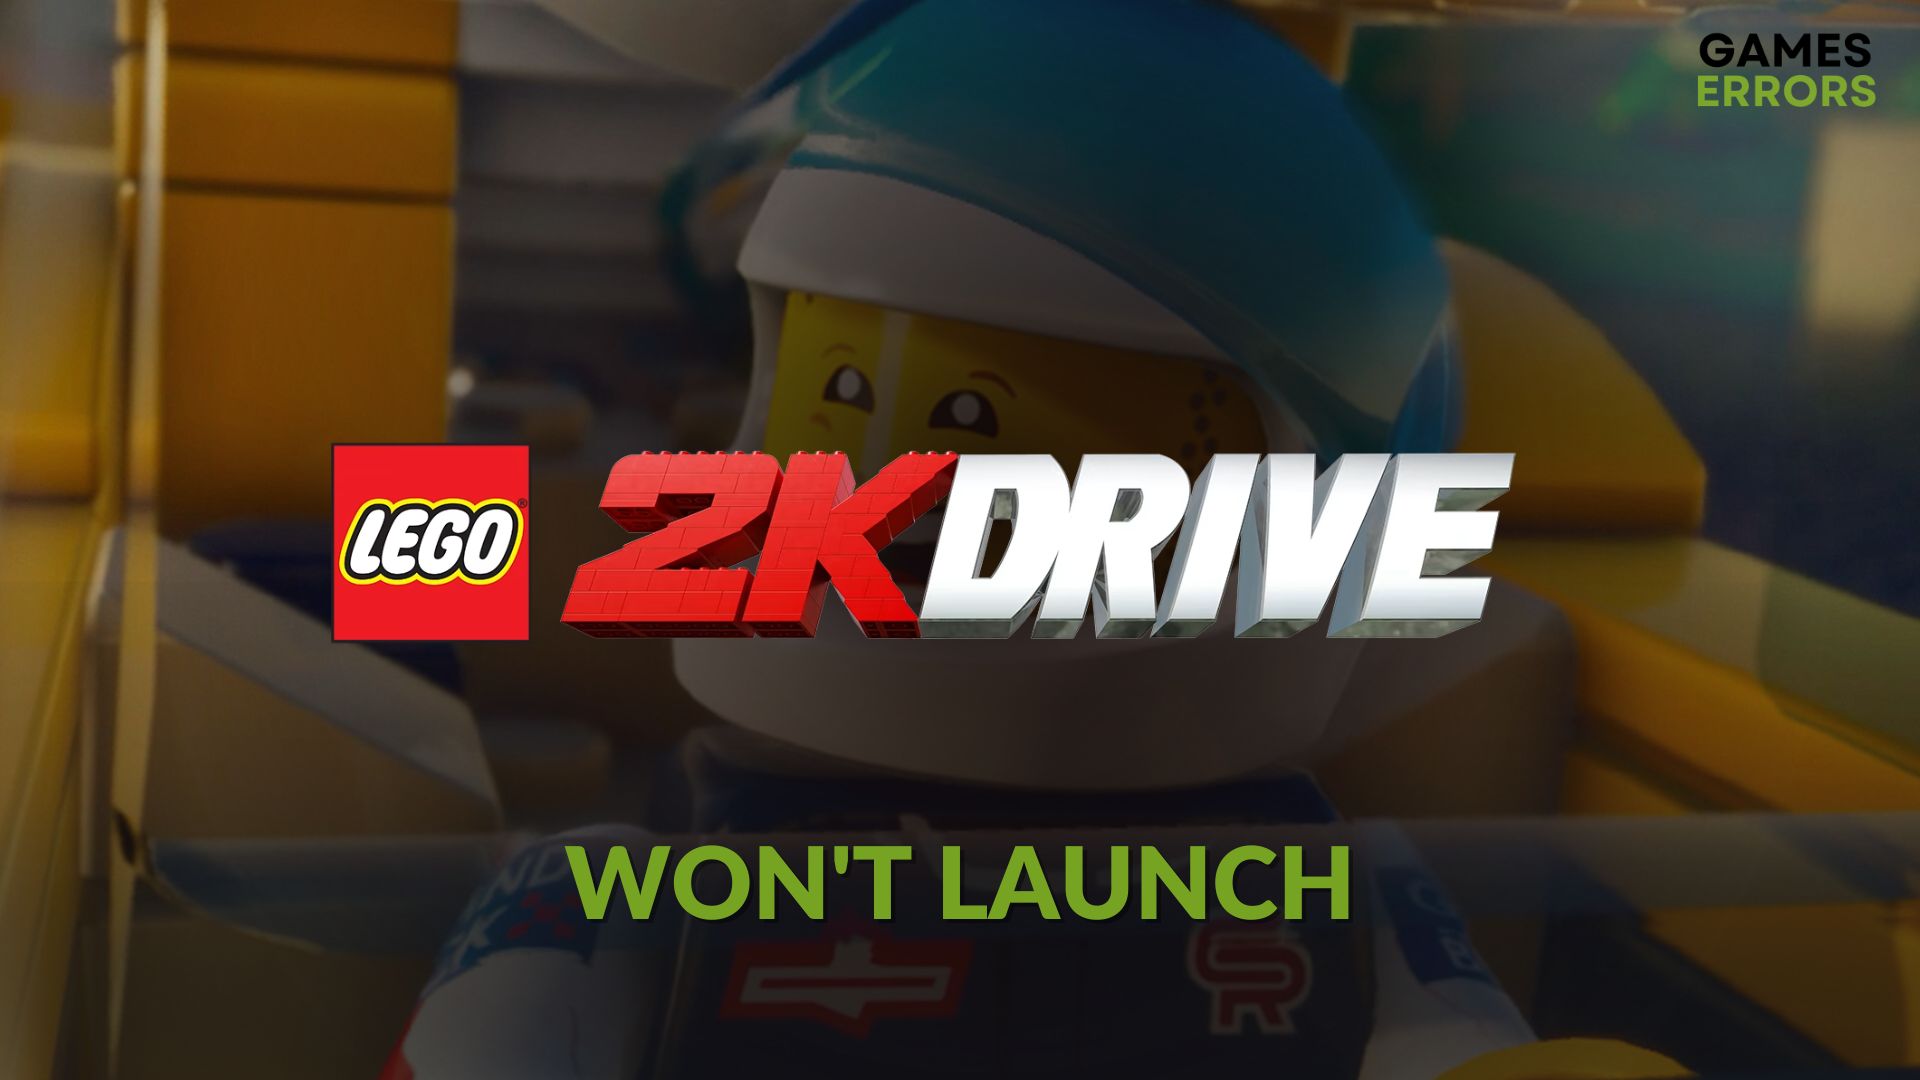 fix LEGO 2K Drive won't launch